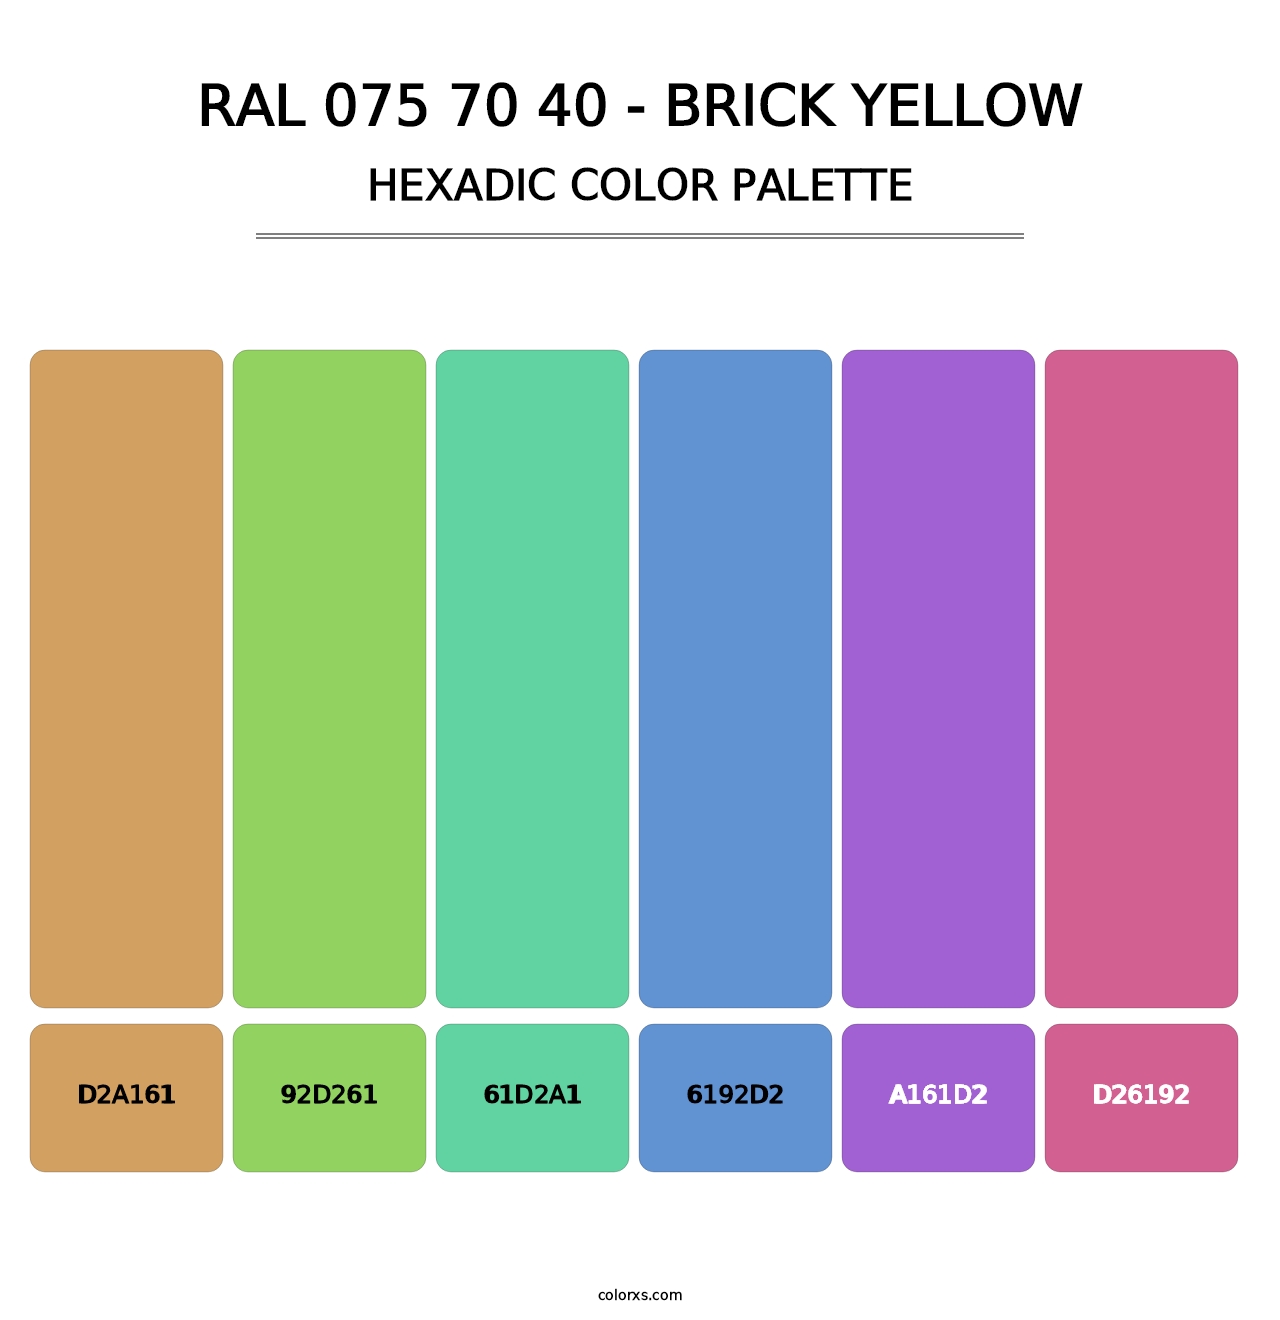 RAL 075 70 40 - Brick Yellow - Hexadic Color Palette